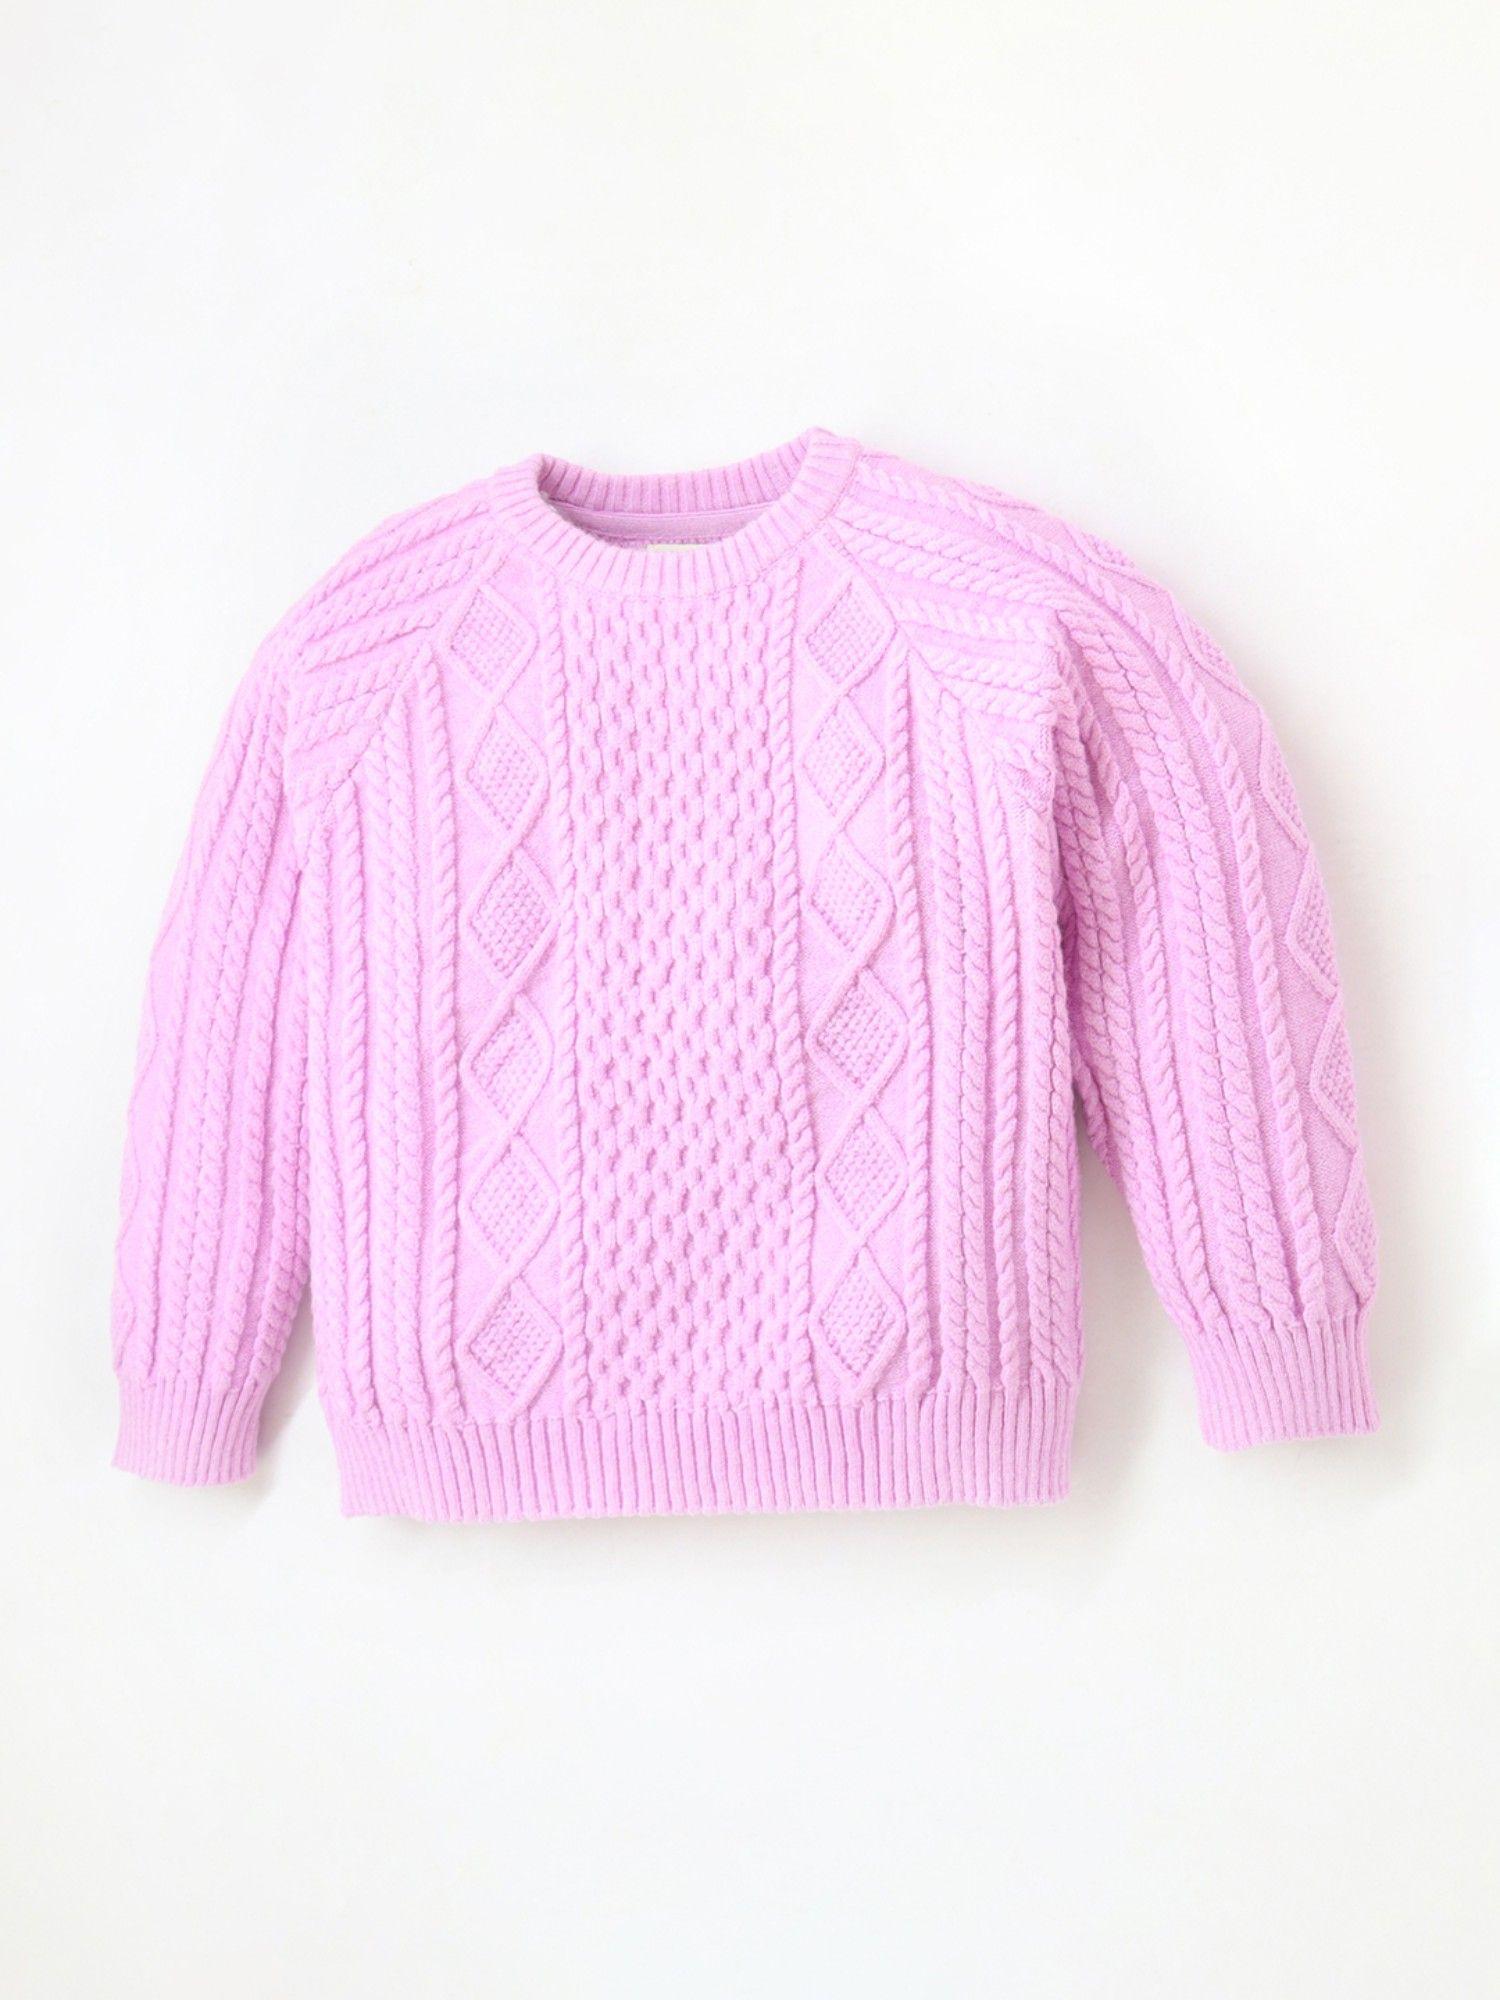 Soft Gender Neutral Lavender Sweater